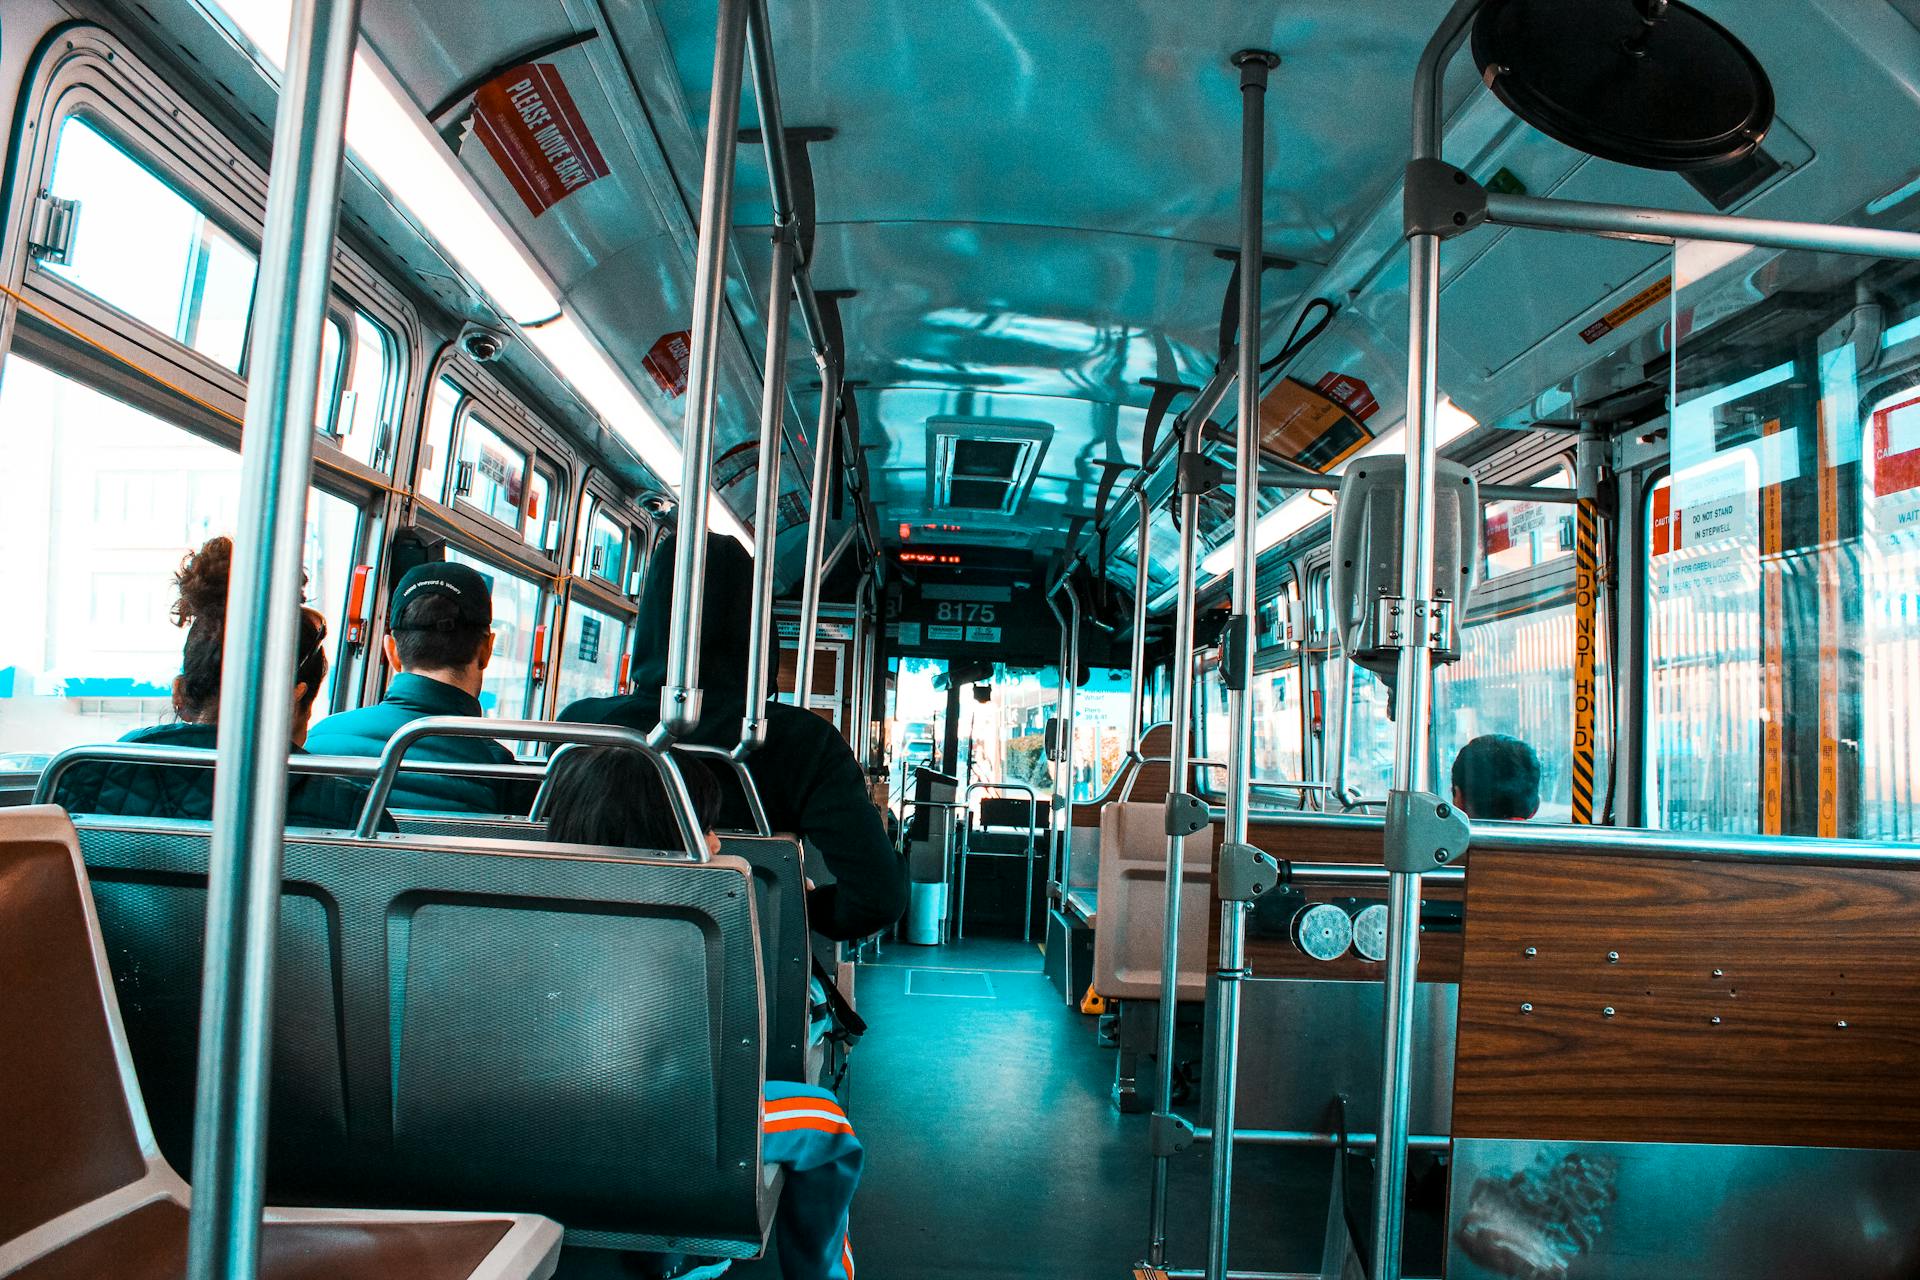 The interior of a public bus | Source: Pexels